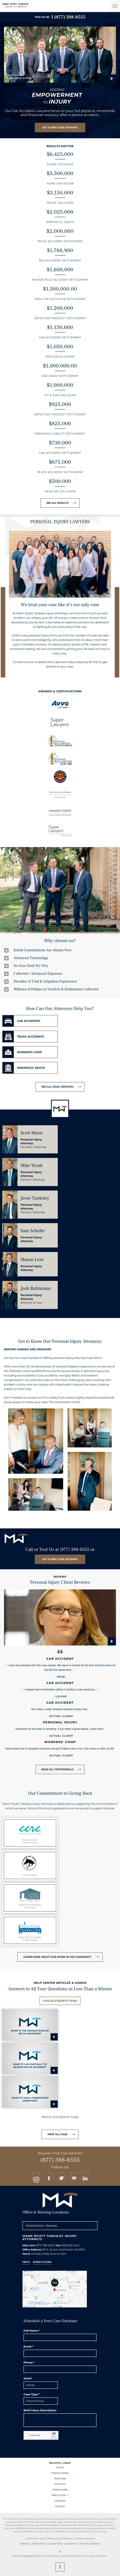 Mann Wyatt Tanksley Injury Attorneys - Kansas City MO Lawyers